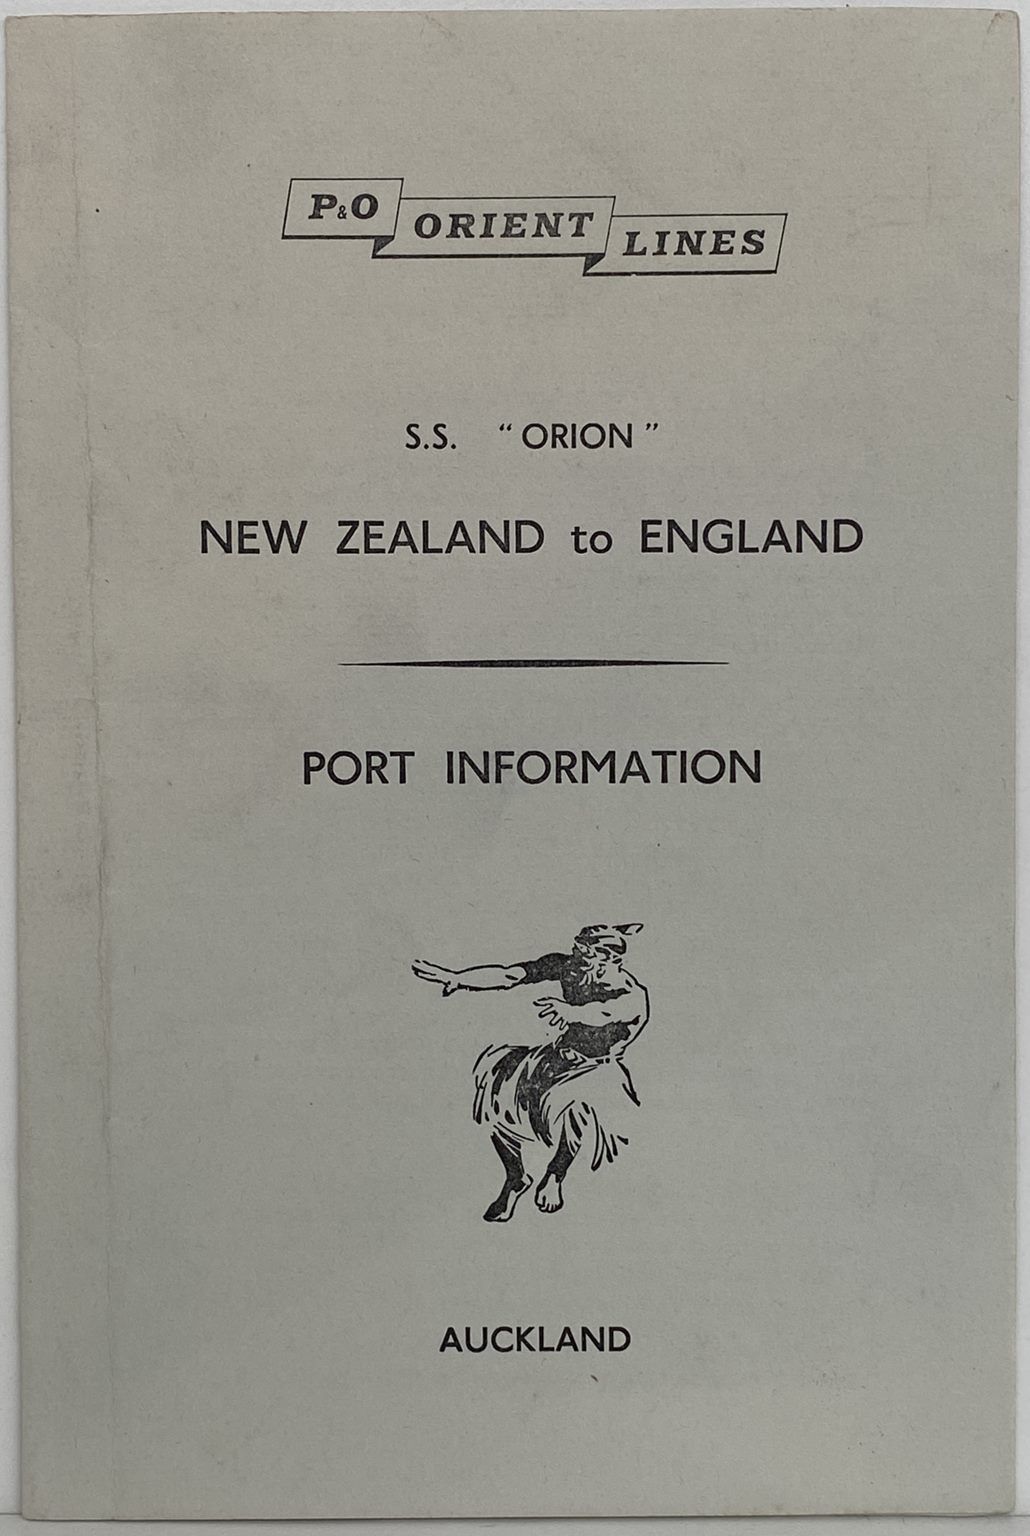 MARITIME MEMORABILIA: P&O Orient Lines - Port Information for Auckland 1962